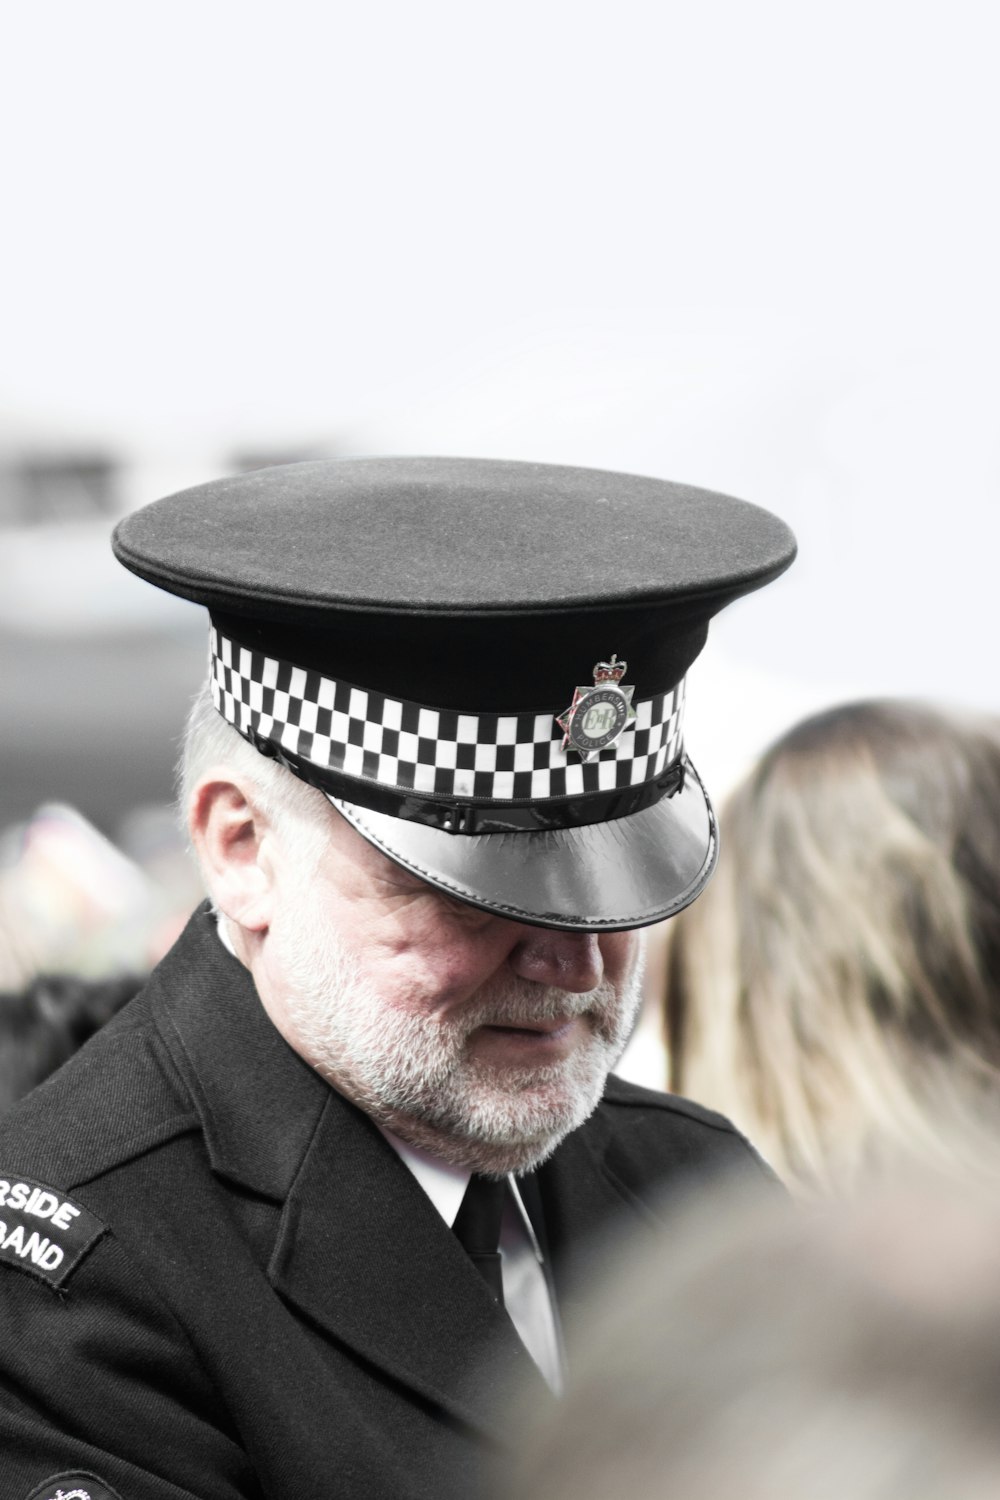 policial usando chapéu branco e preto